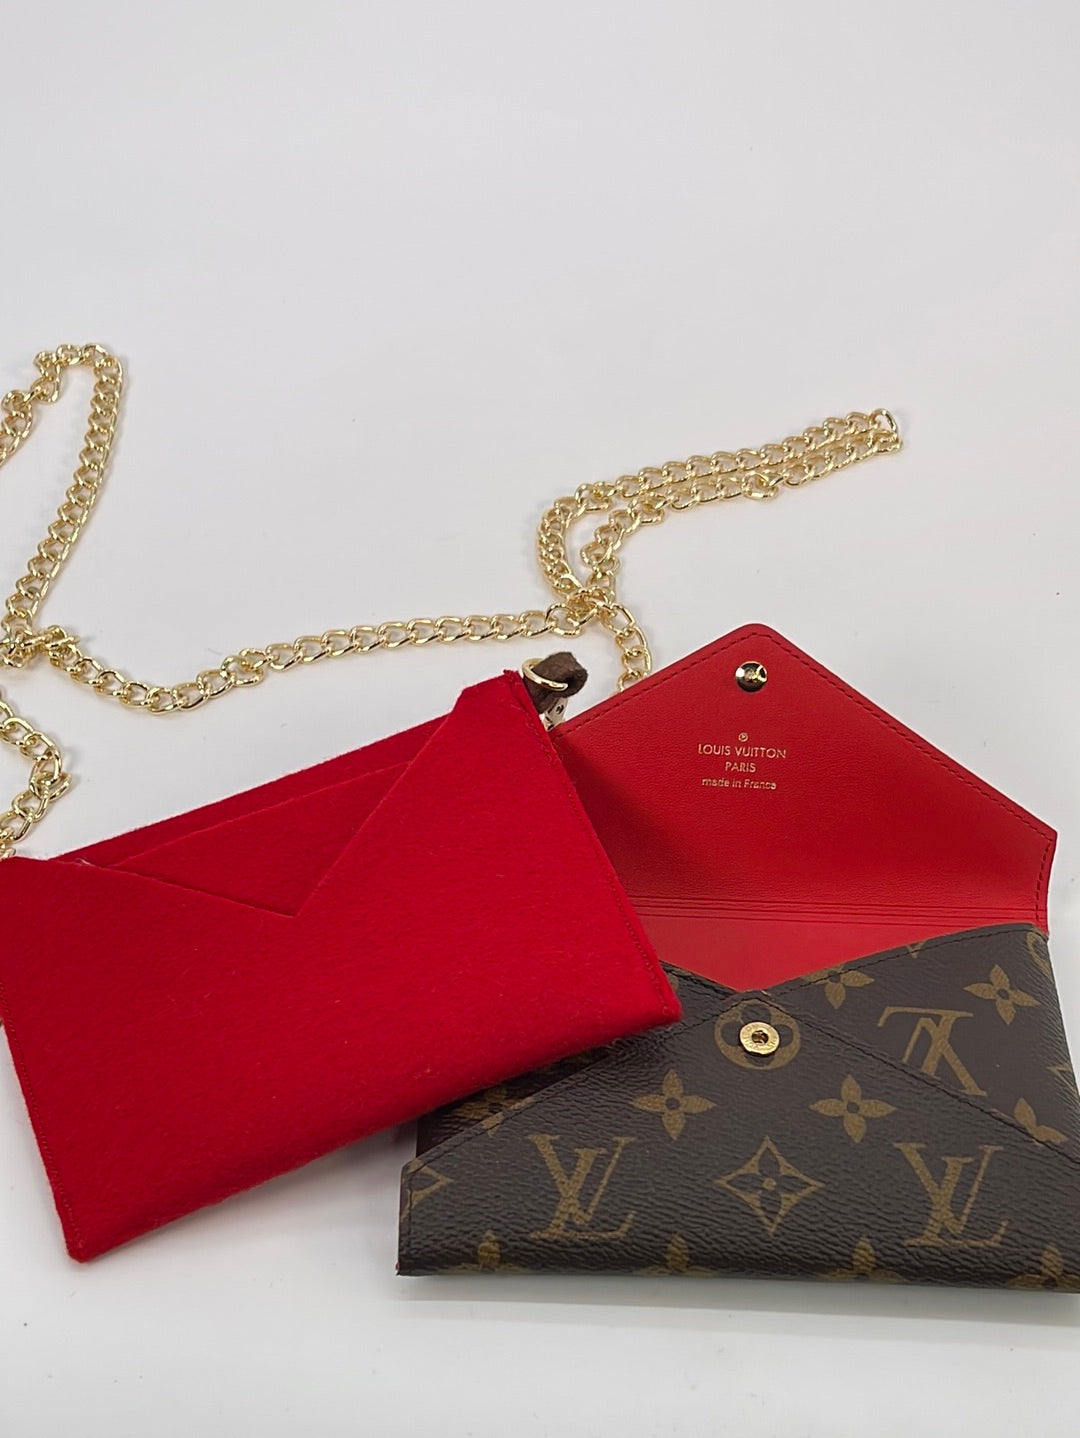 Louis Vuitton Large Kirigami Conversion Kit to Shoulder Bag with